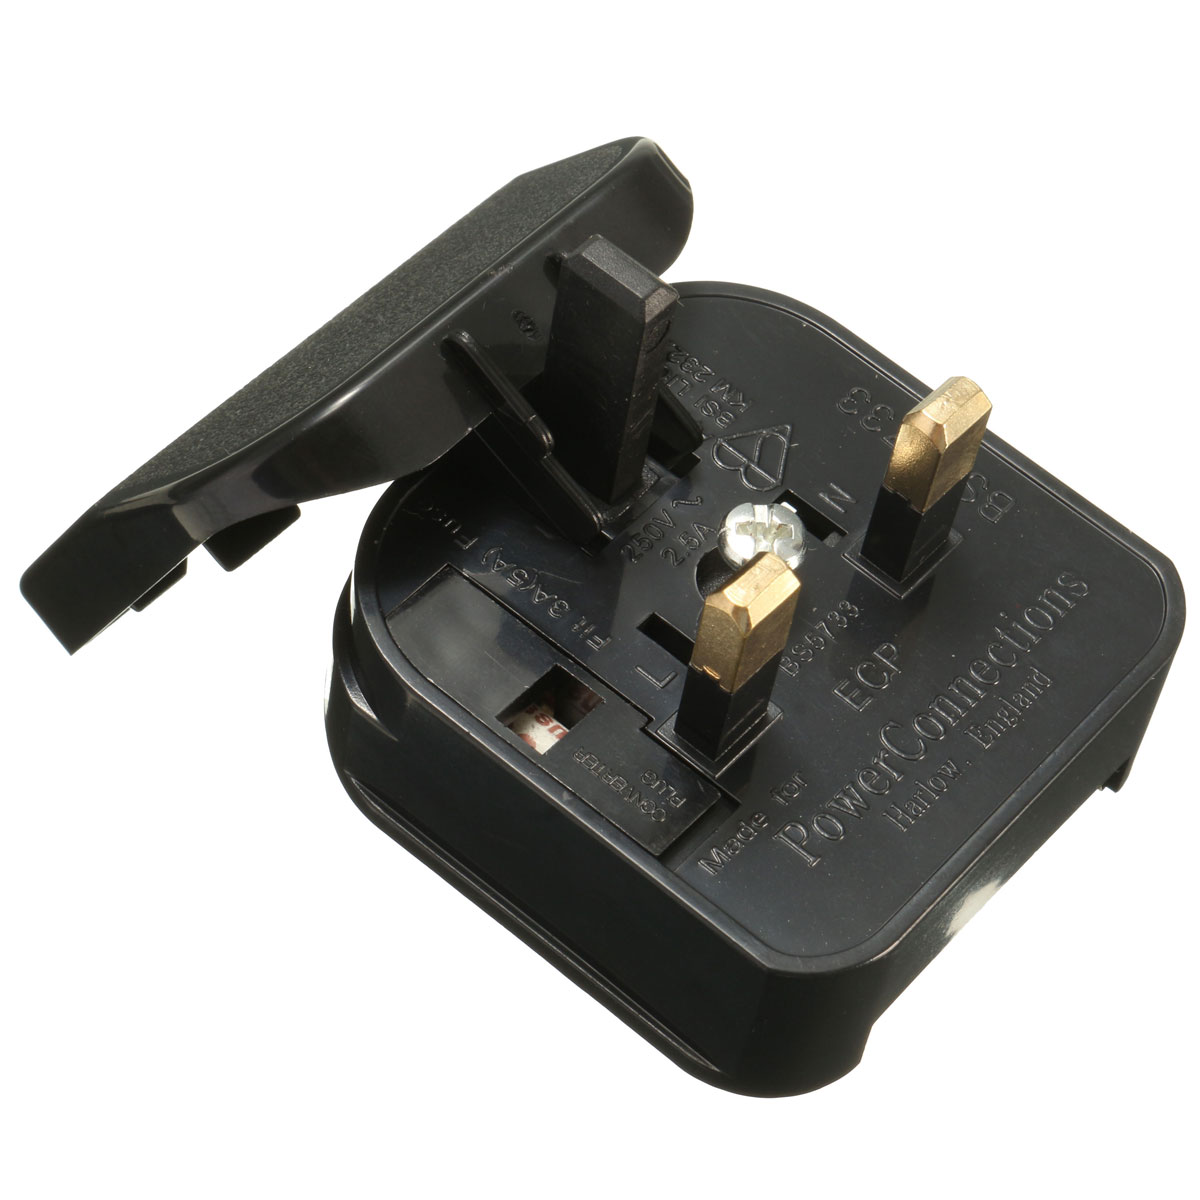 UK-Converter-Adaptor-Plug-Travel-Power-Connections-Black-1054514-4